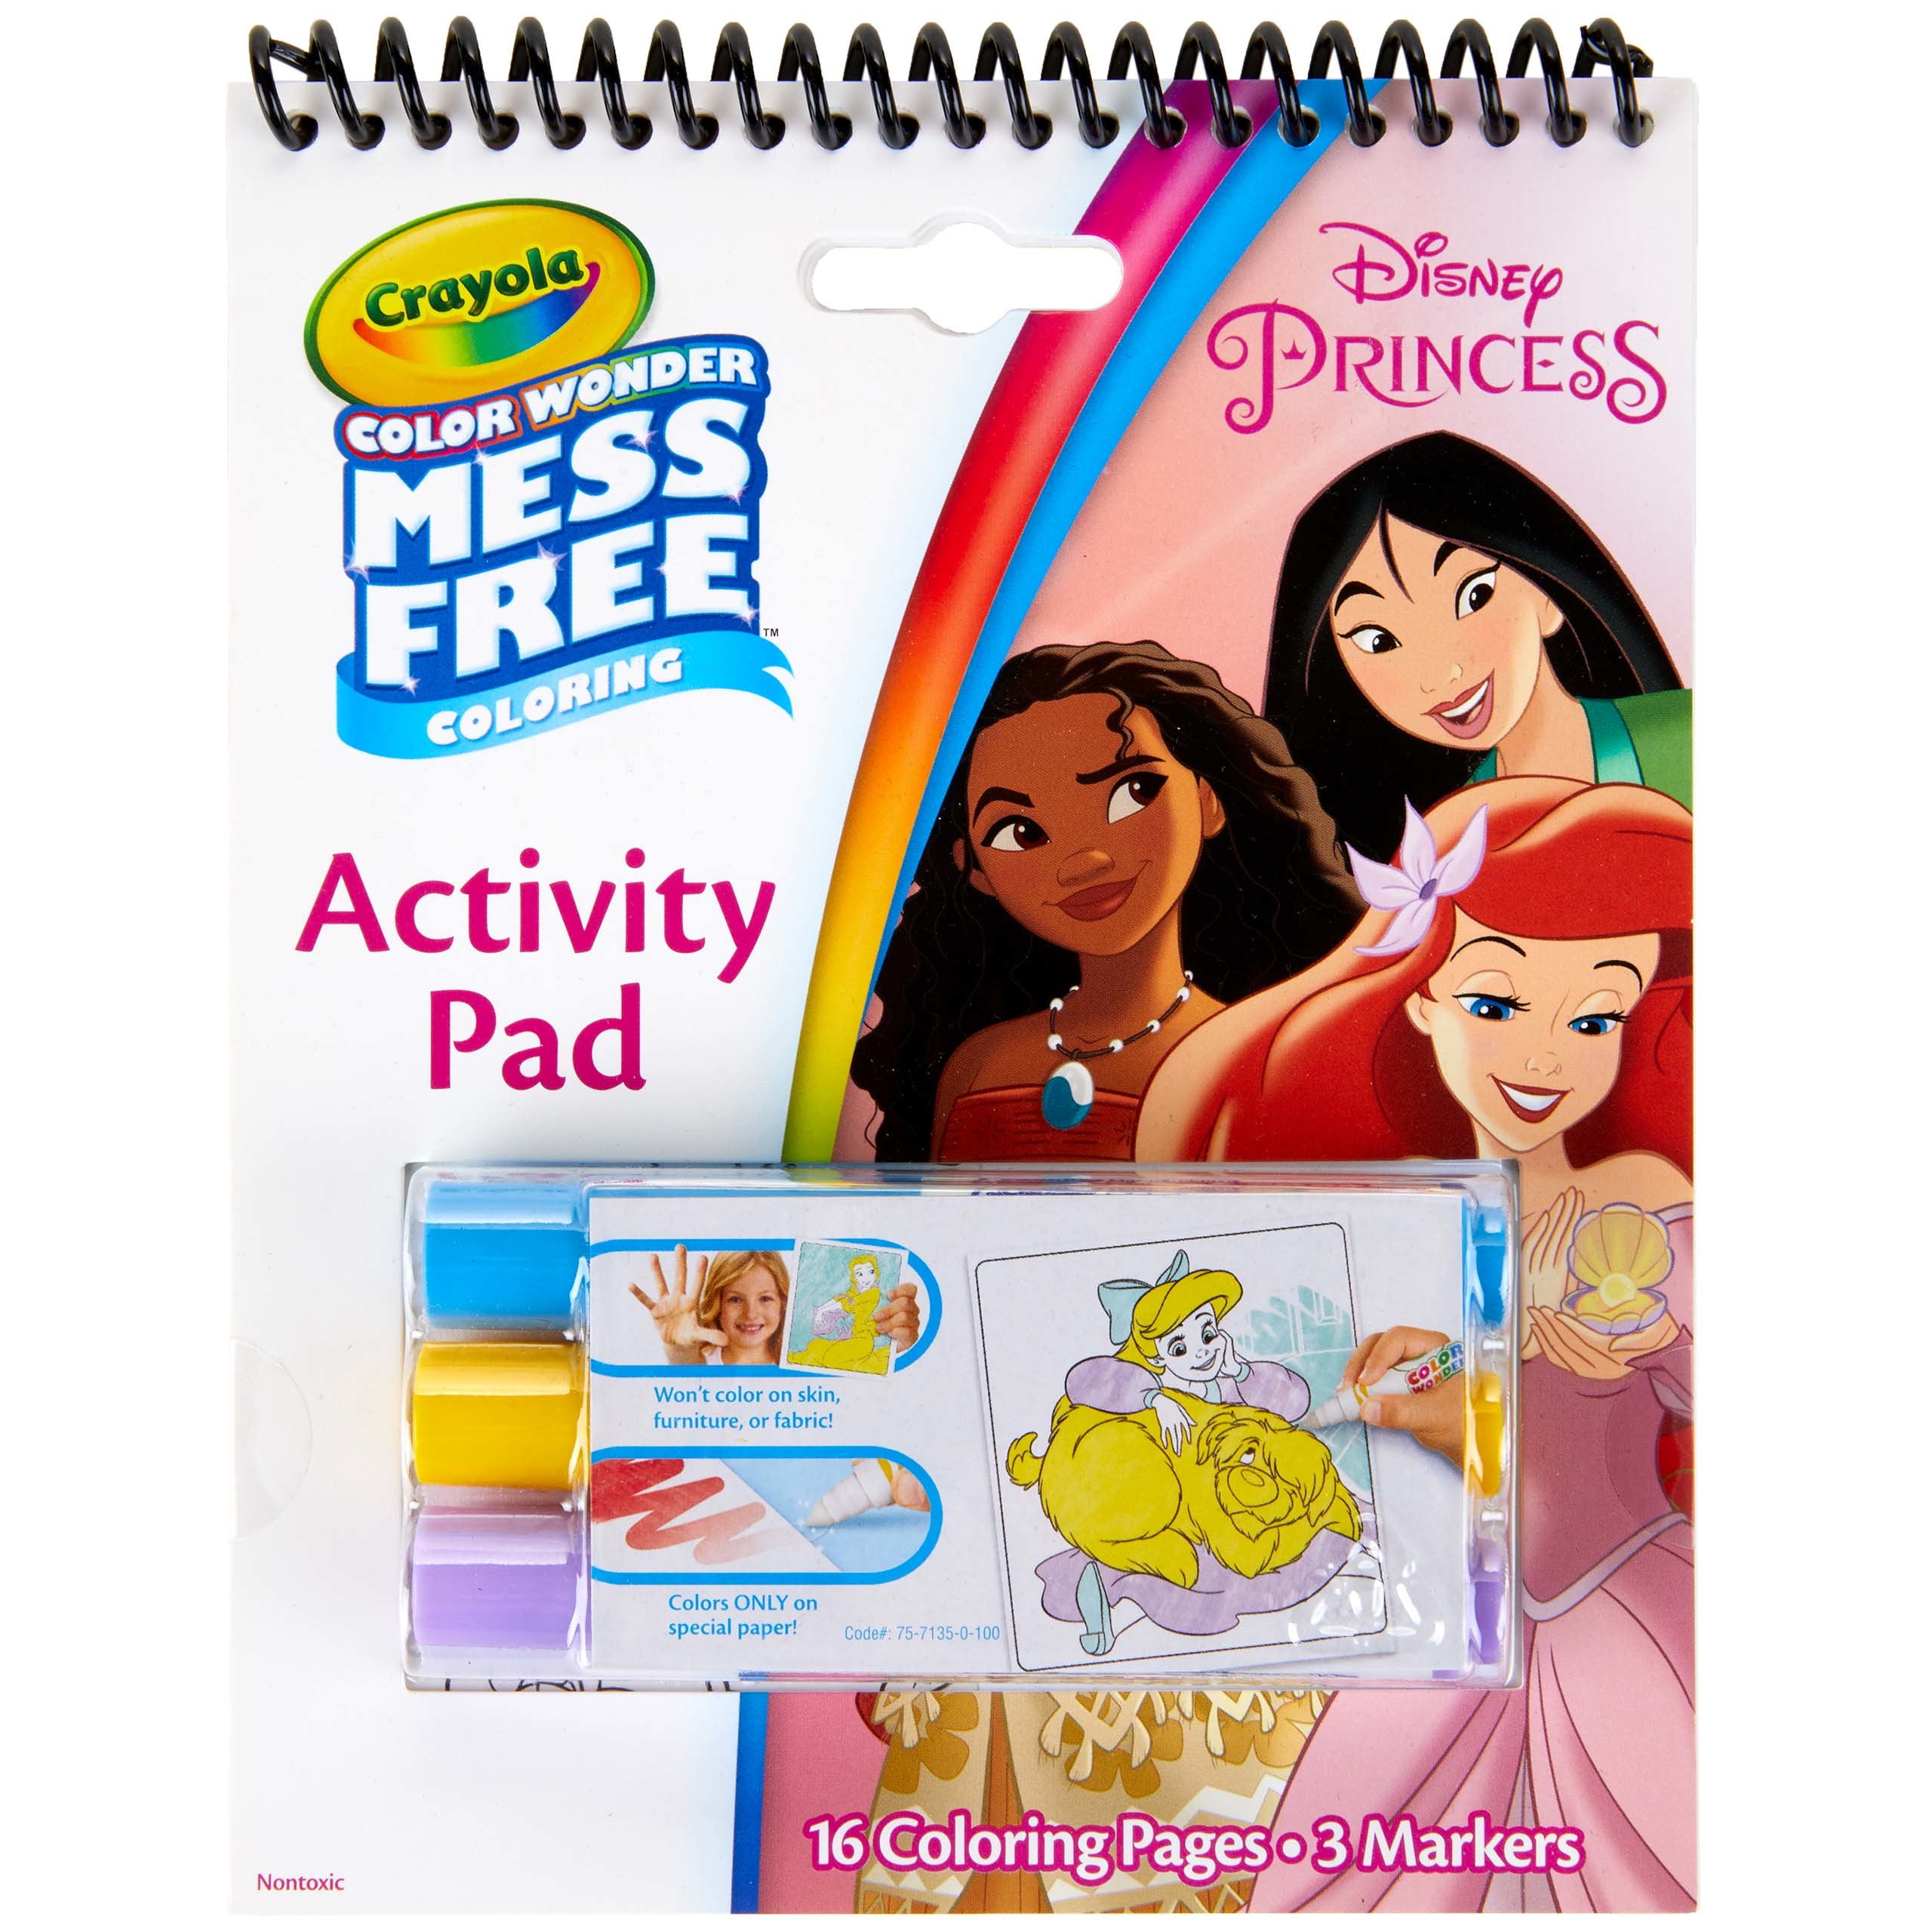 Crayola Color Wonder Disney Princess Coloring & Activity Pad, Mess Free